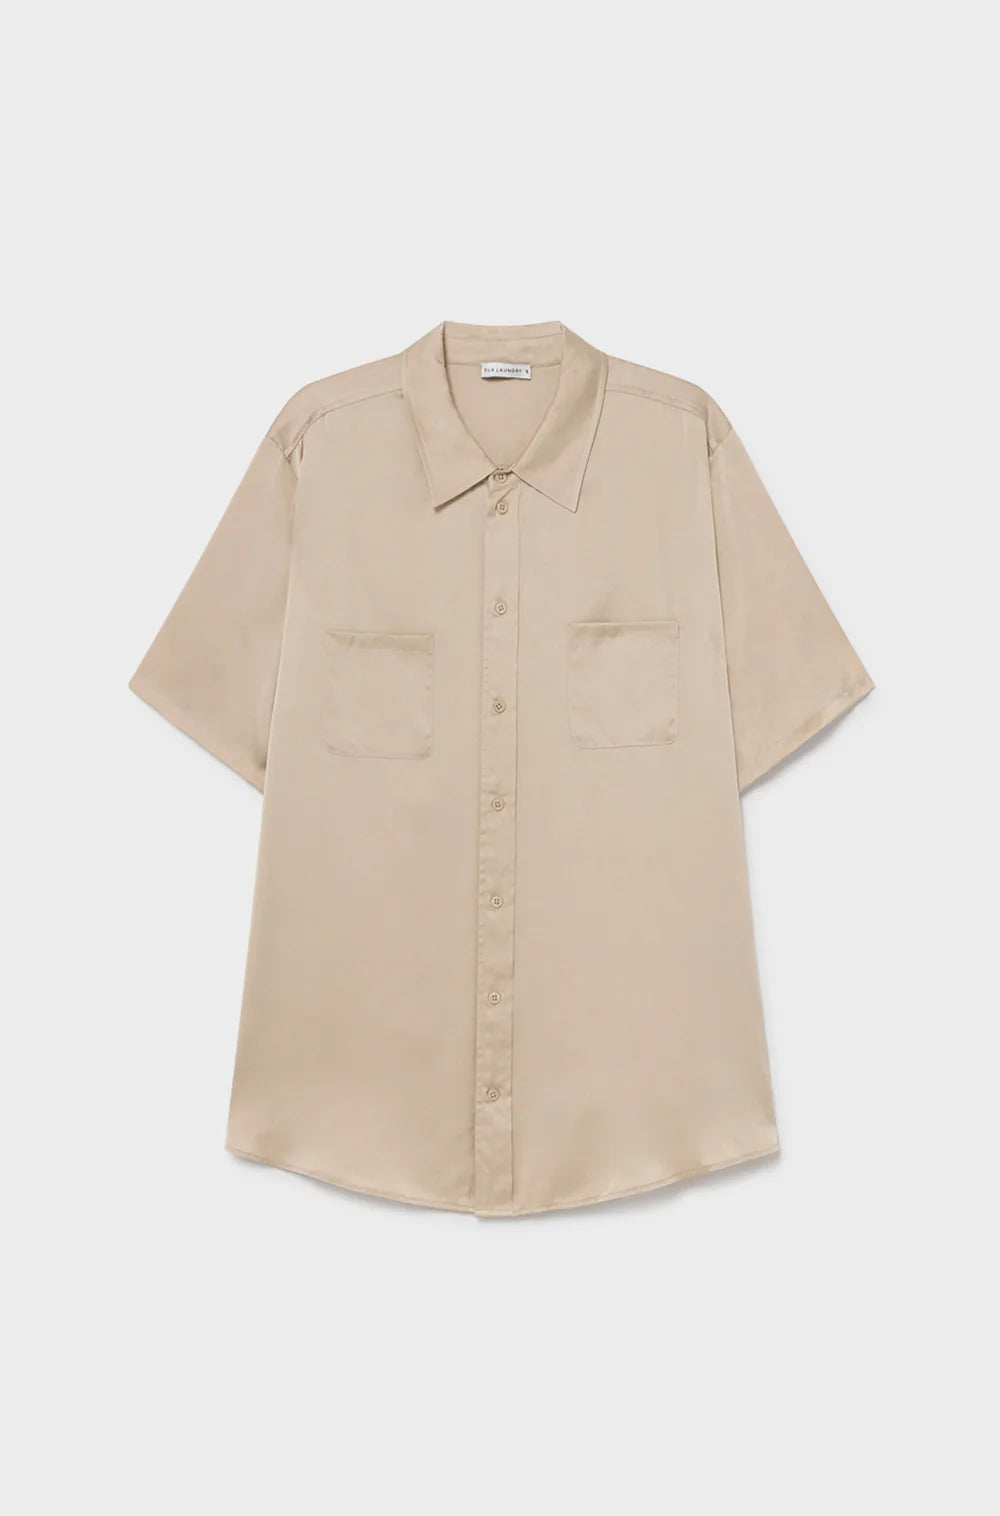 Short Sleeve Boyfriend Shirt in Hazelnut by Silk Laundry